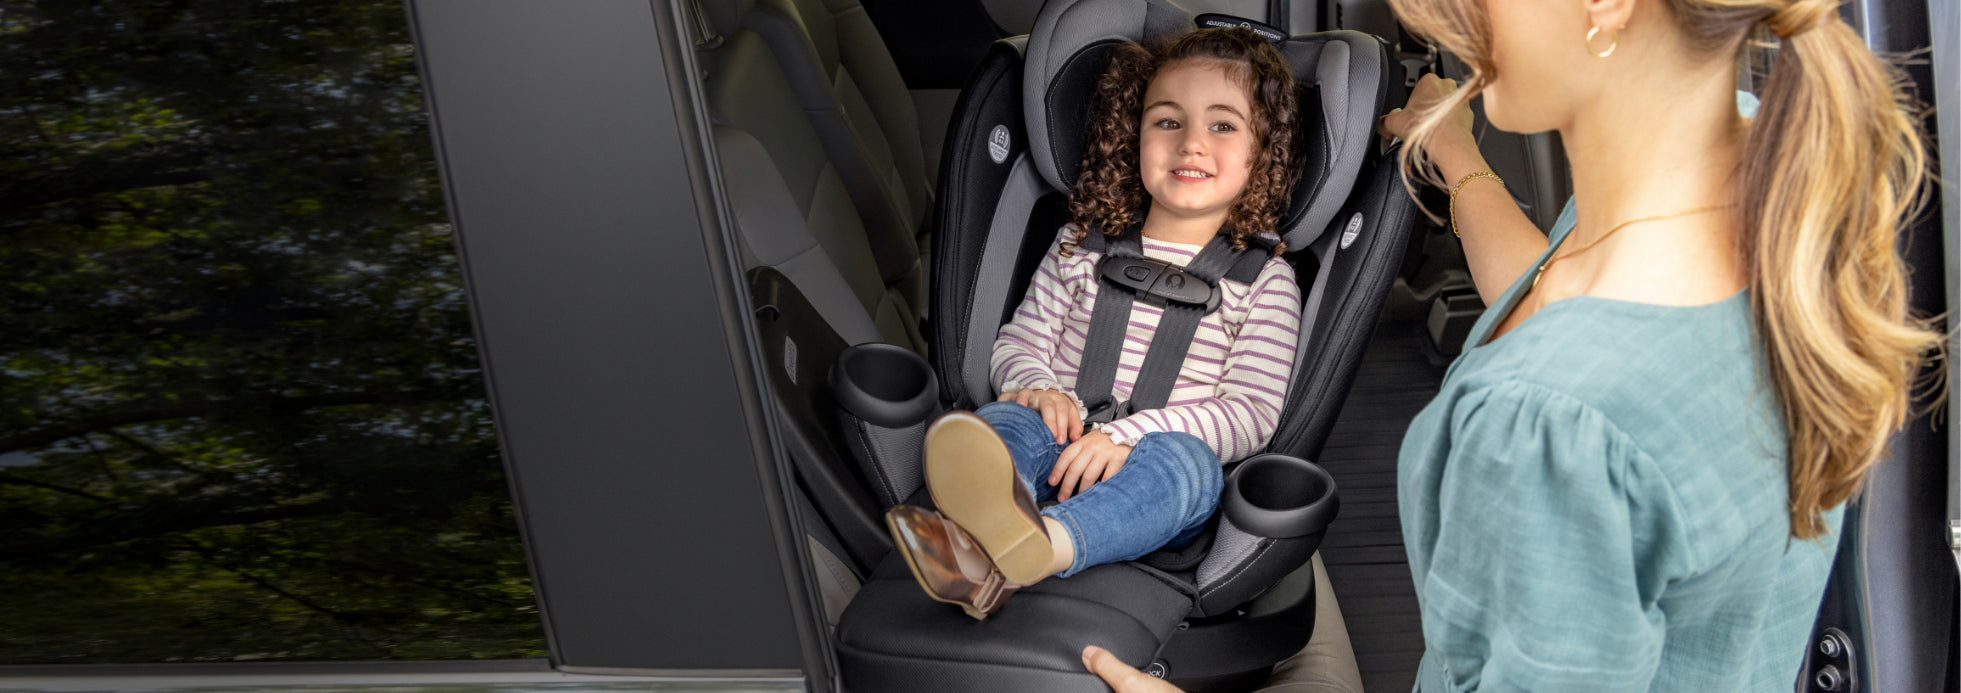 Infant, Child & Convertible Car Seats